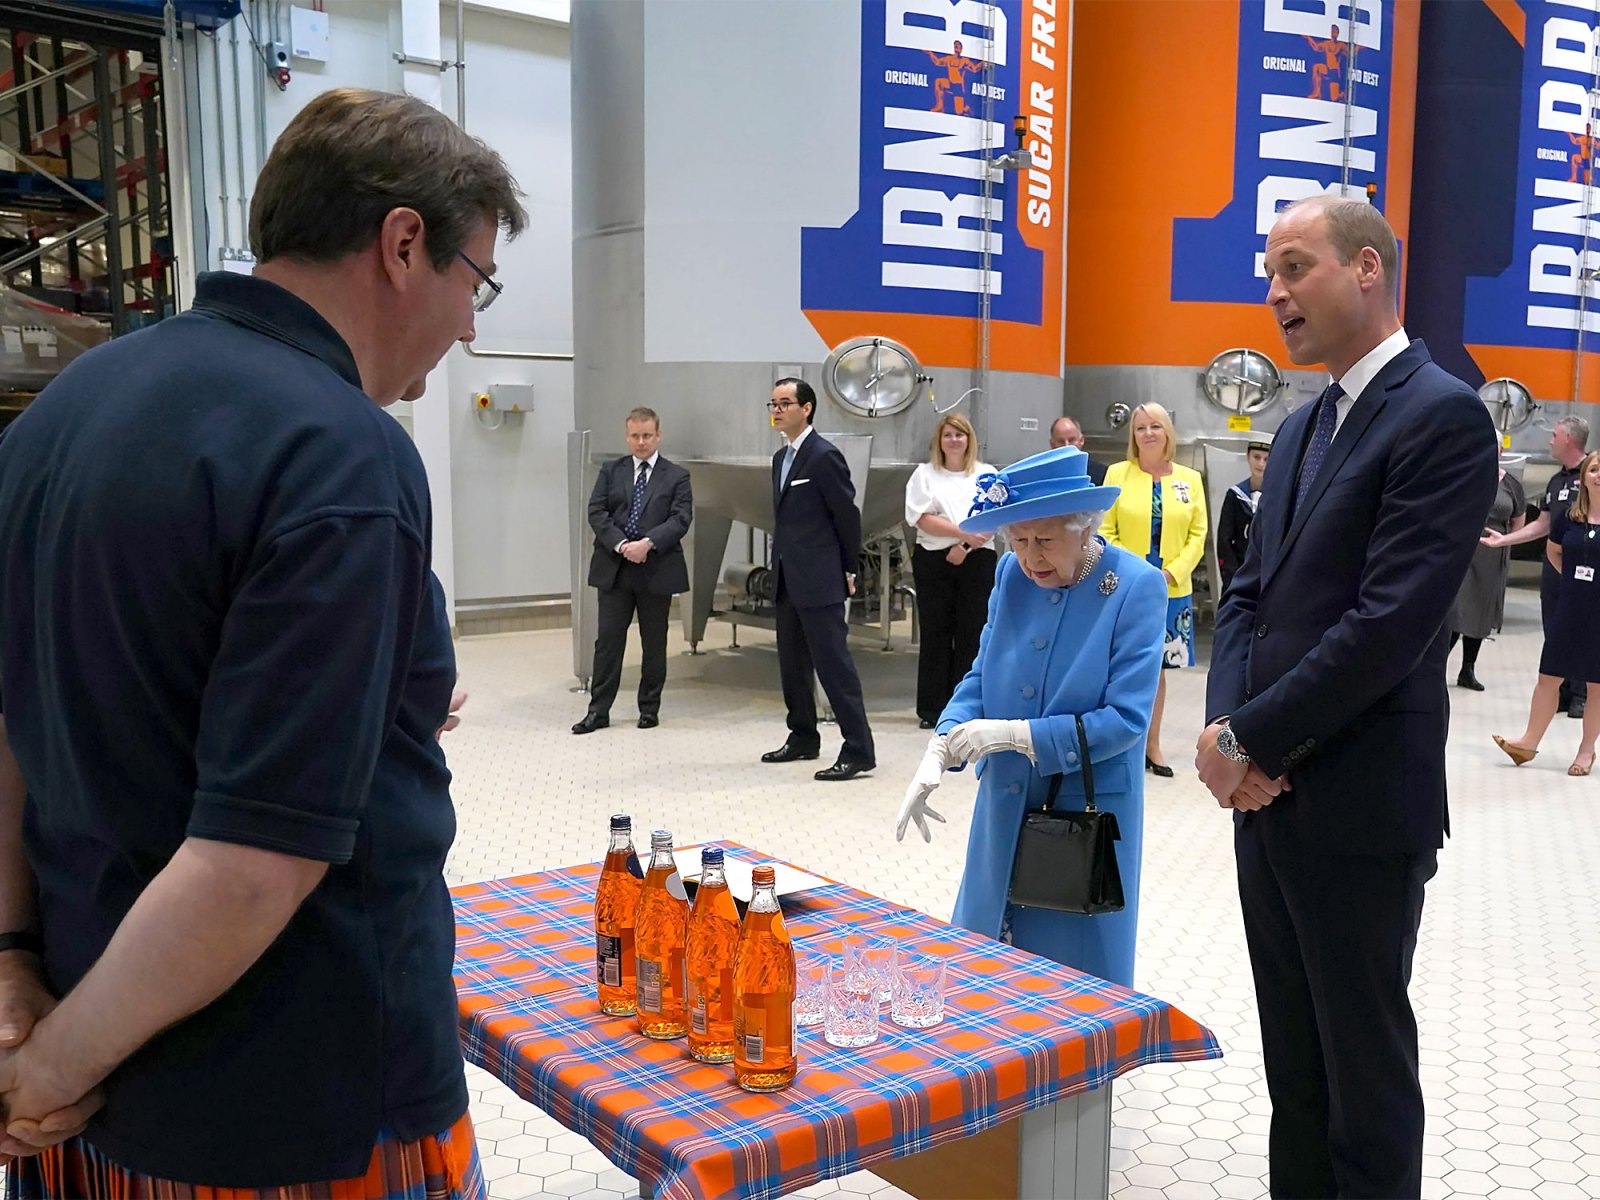 Prince William Joins Queen Elizabeth II Scotland Visit Photos